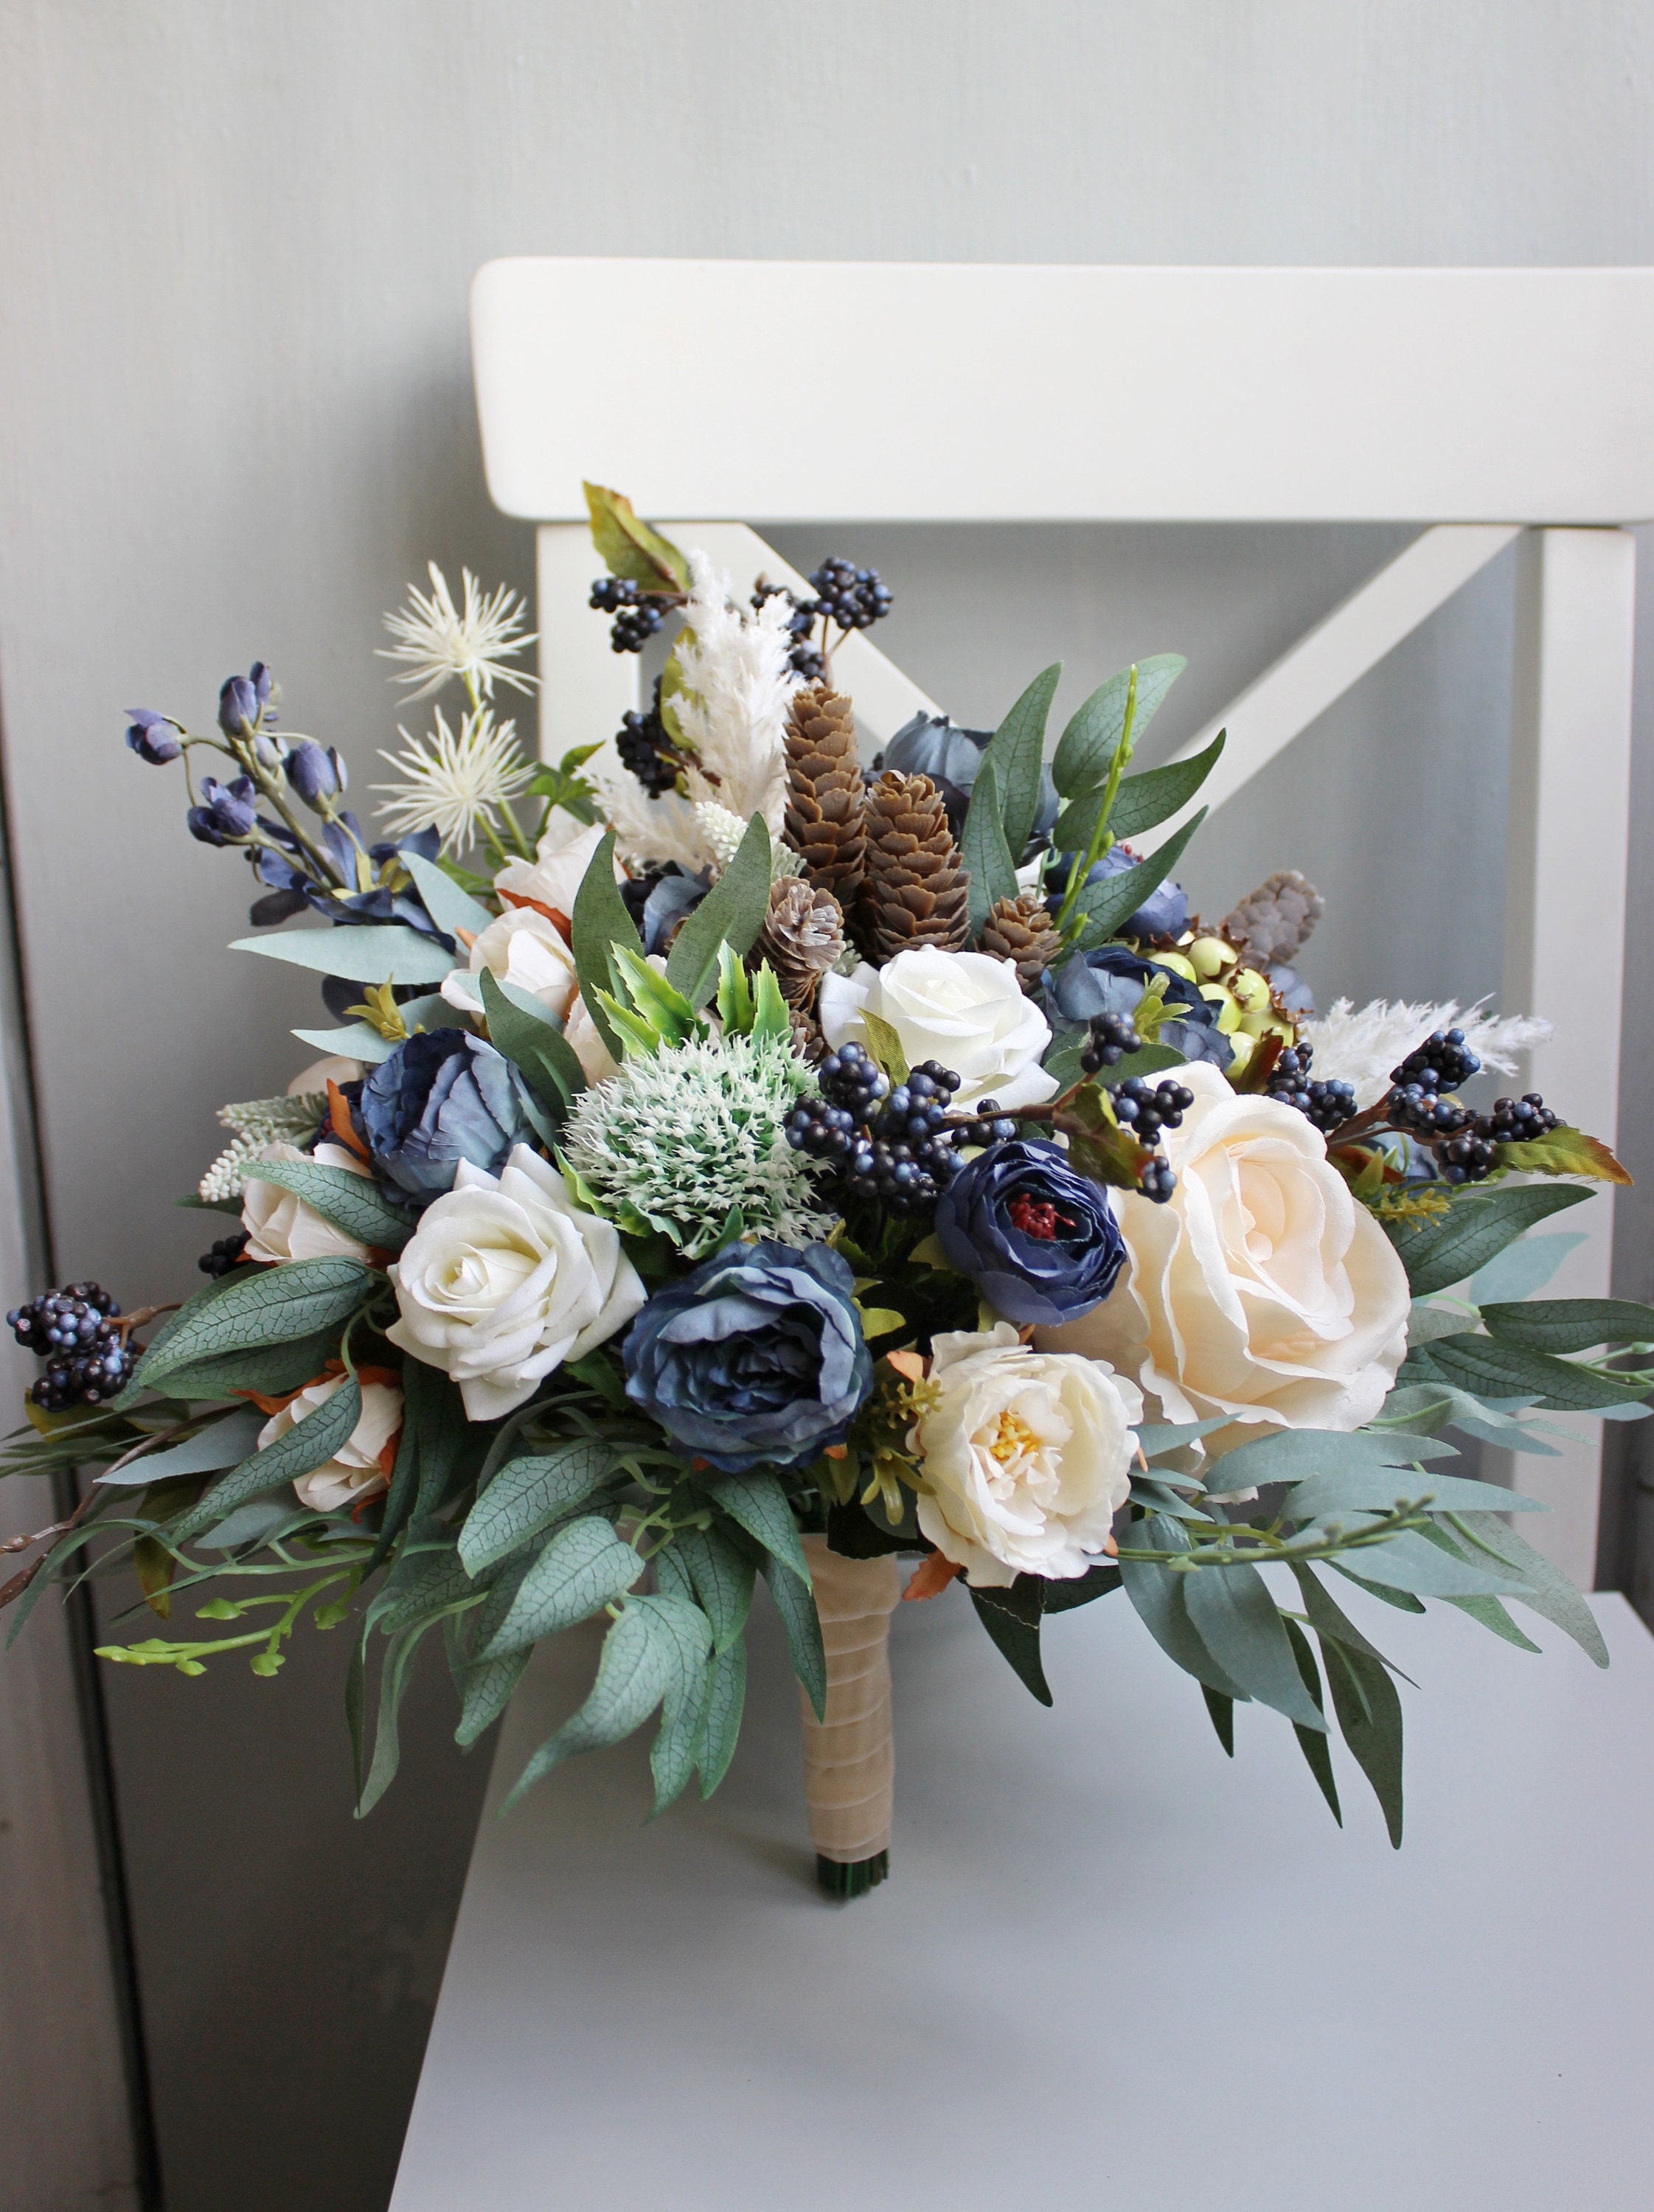 FlowerDreamsBoutique Sage Green Dusty Blue Flower Crown, Winter Wedding Crown, Boho Flower Crown